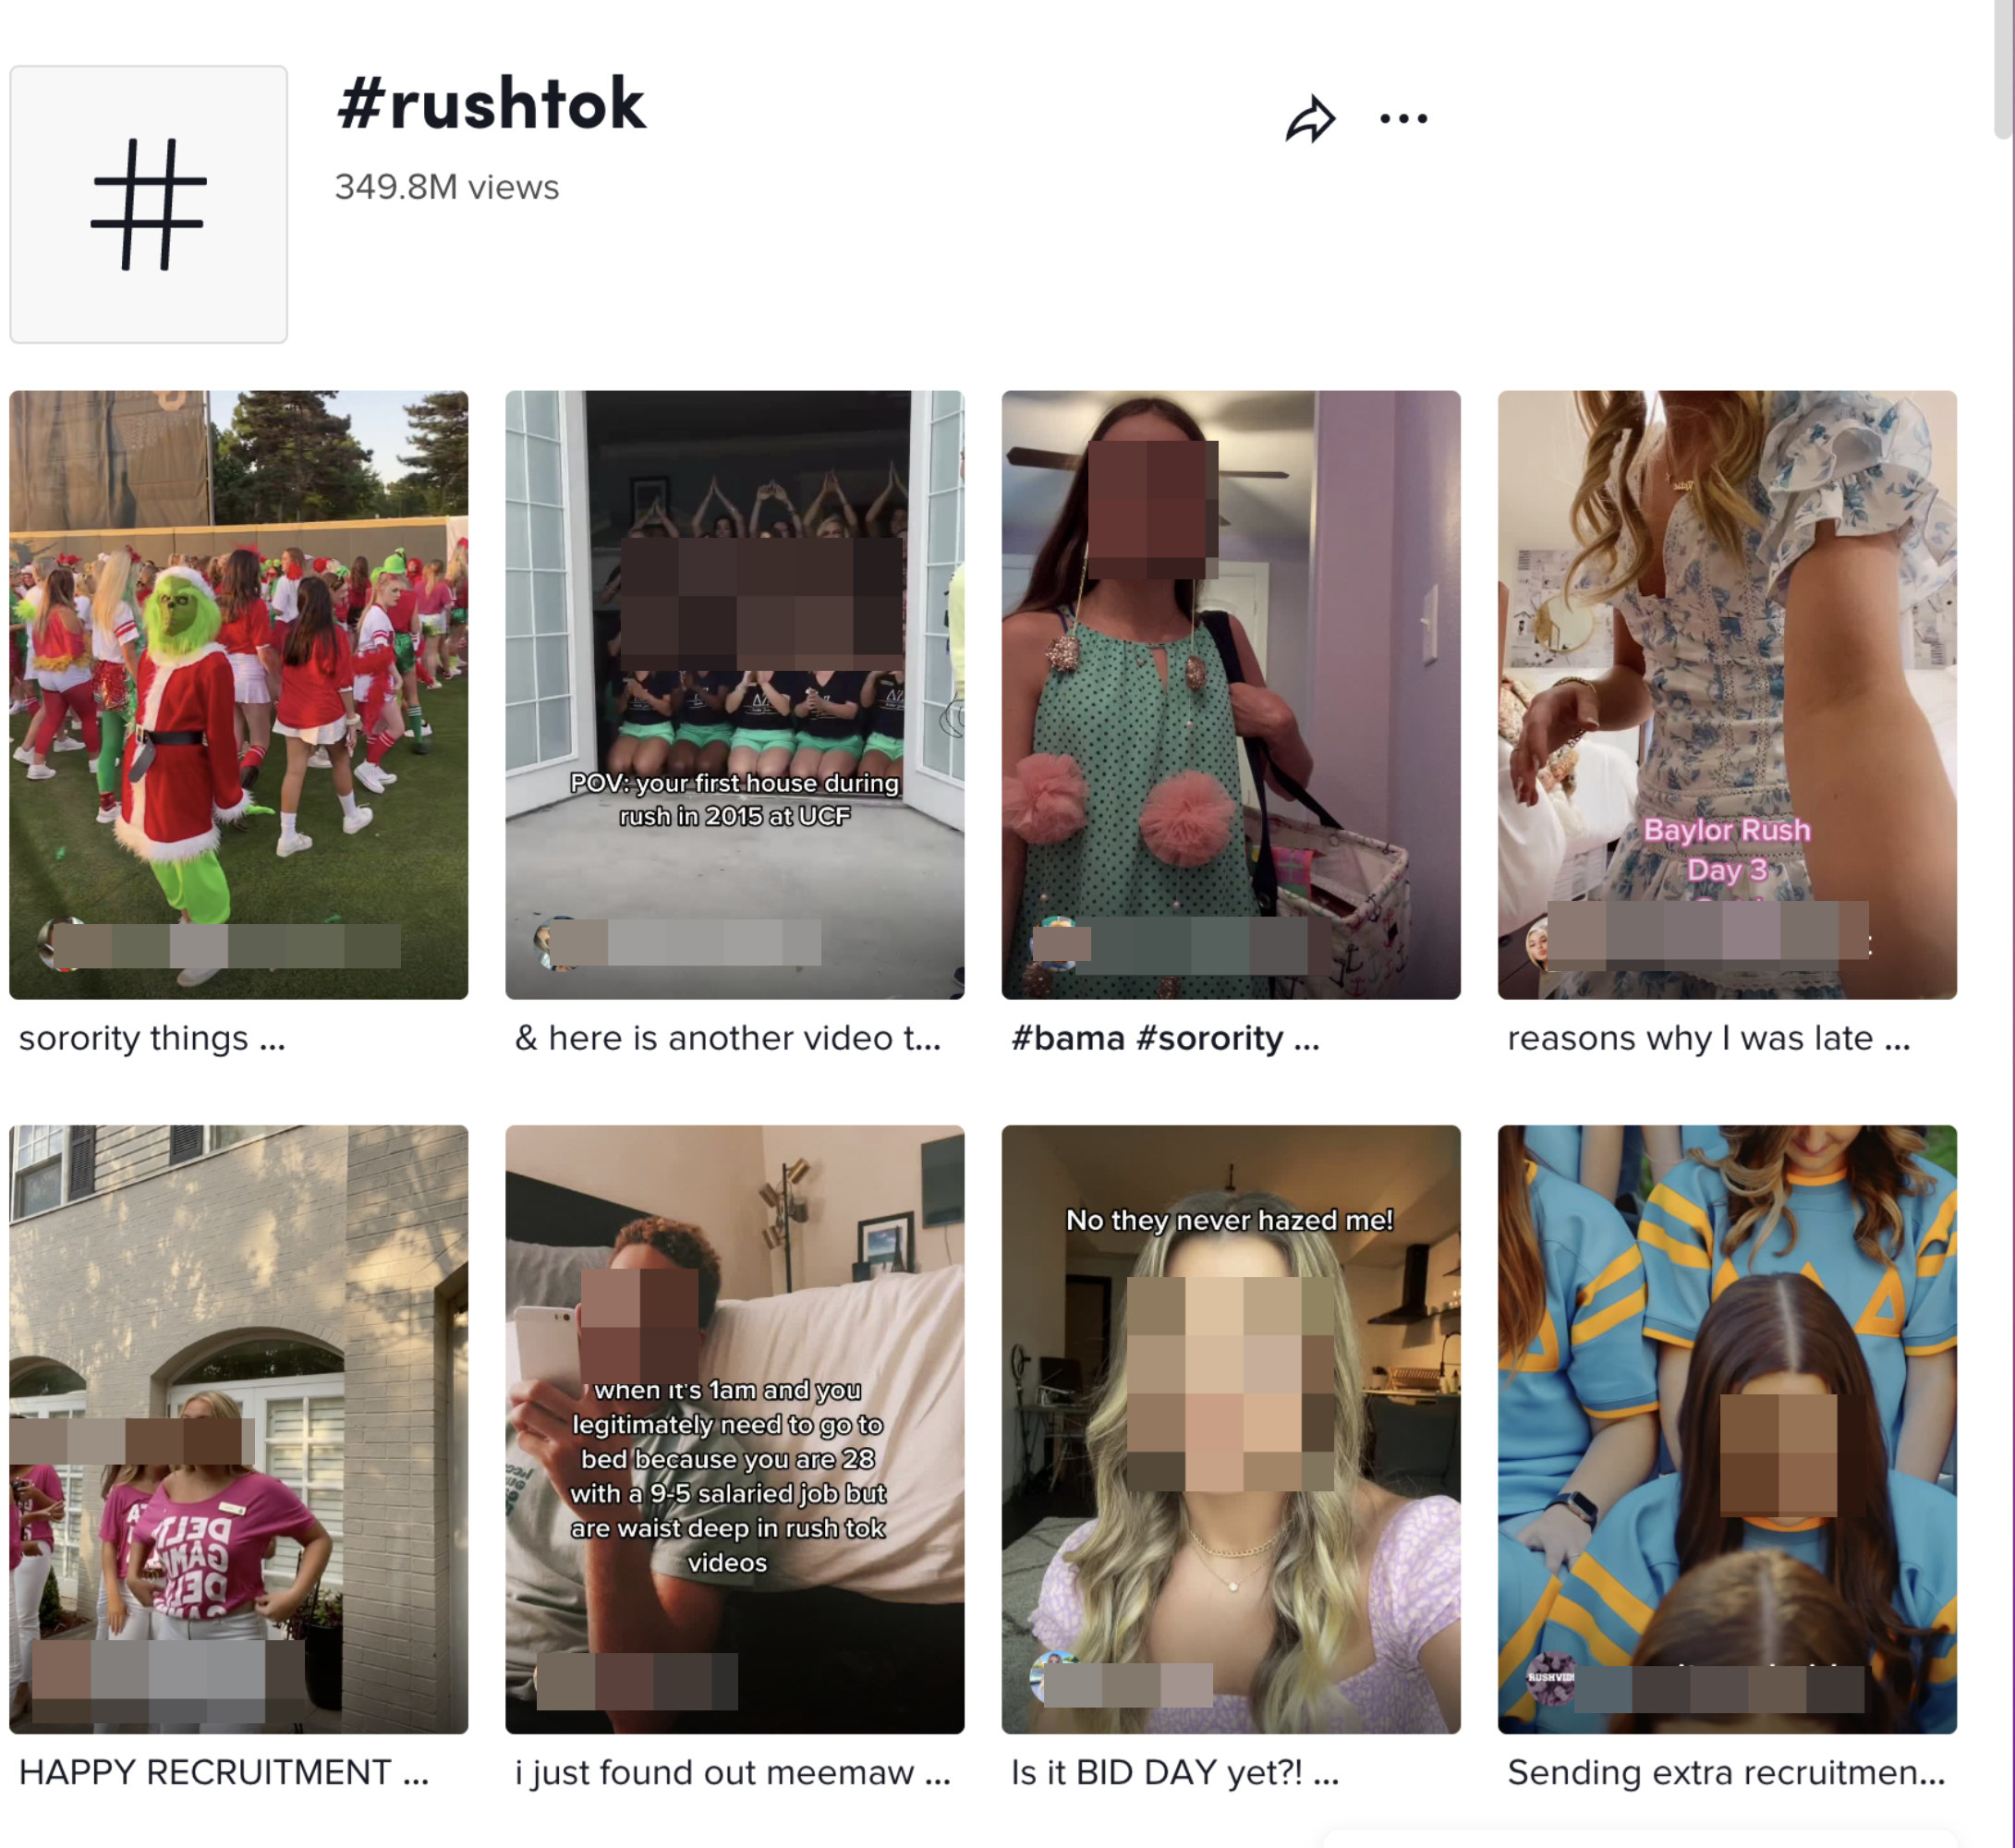 The #rushtok page on TikTok